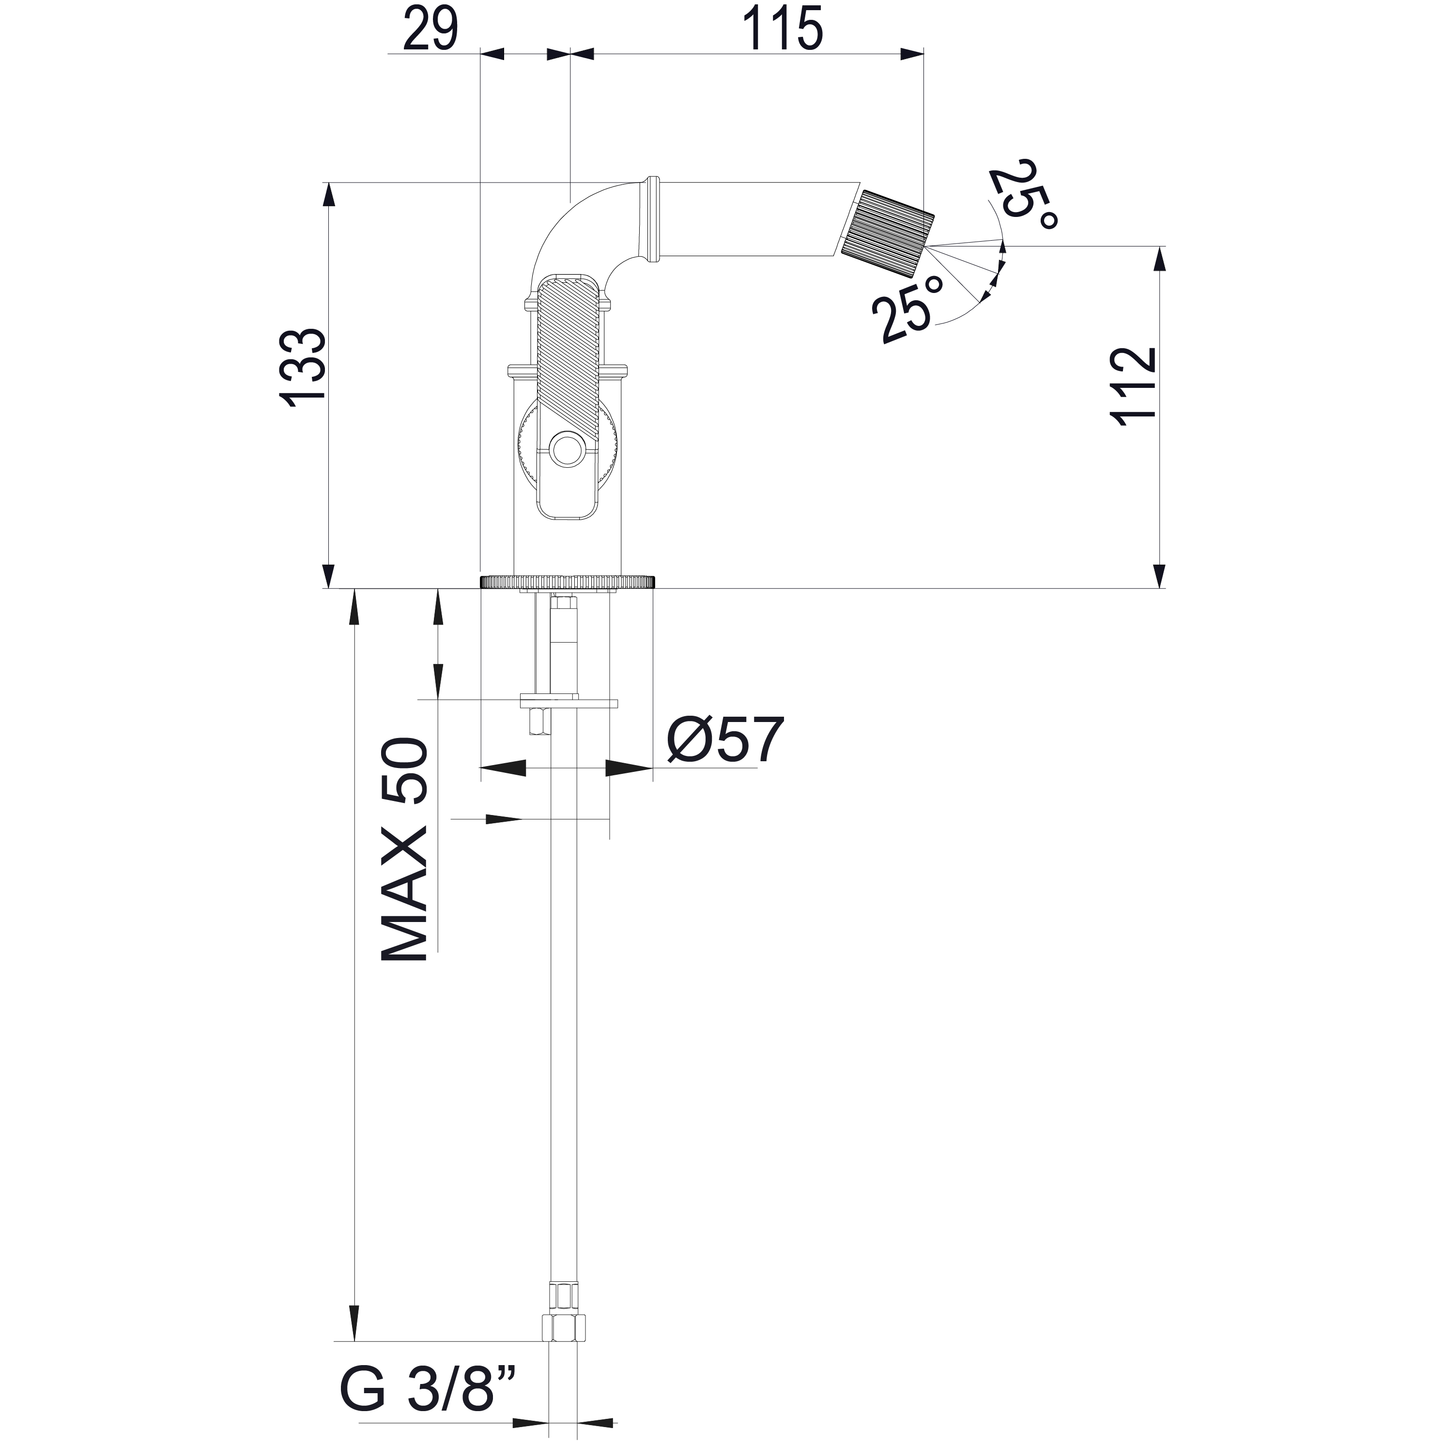 Bidet faucet single hole  Industrial Gas 794011